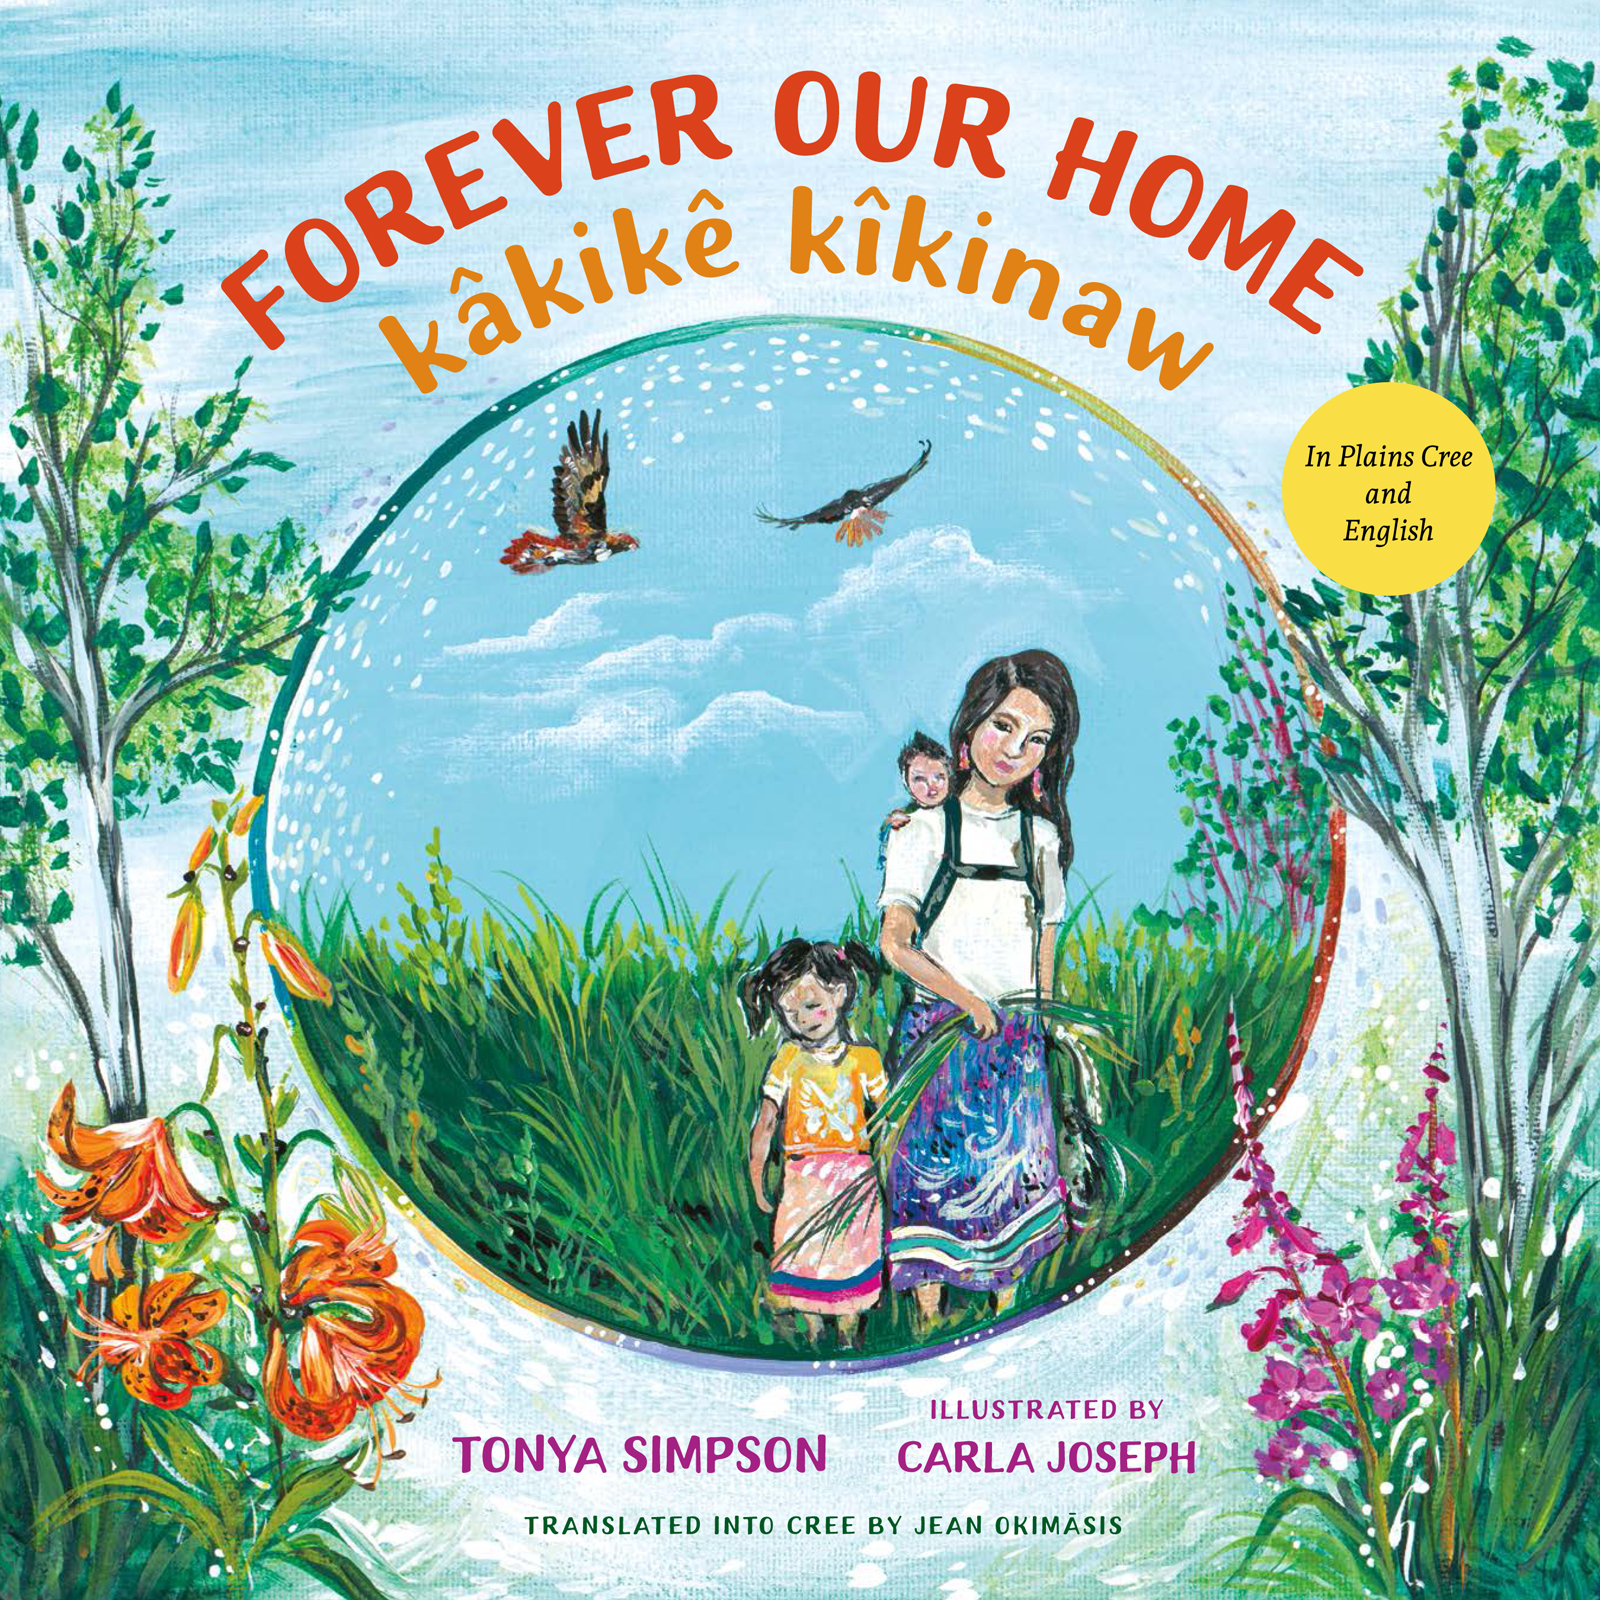 Forever Our Home / kakike kikinaw